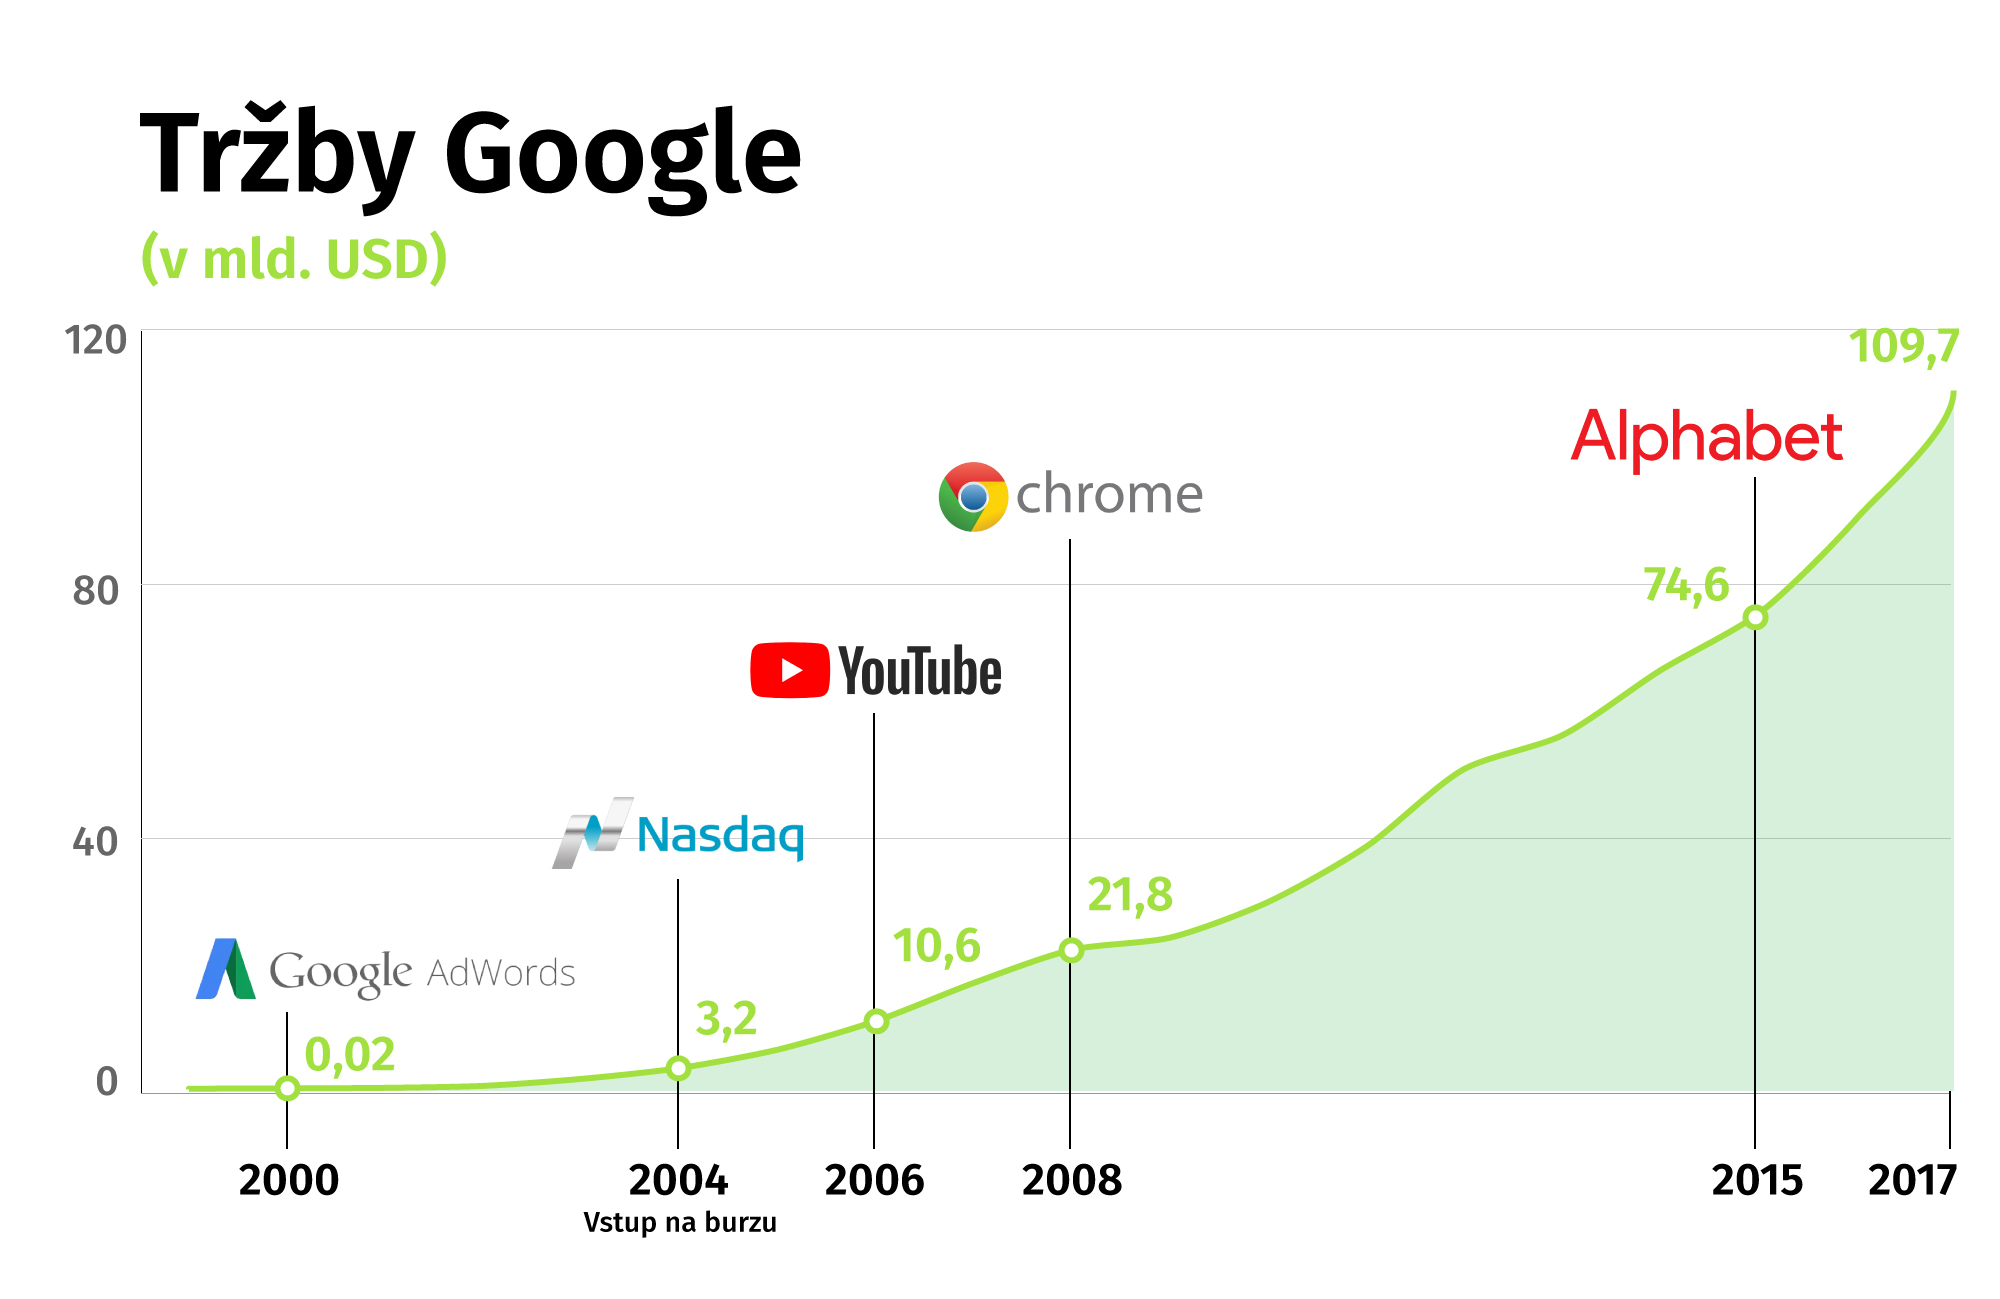 Trby Google v miliardch dolar